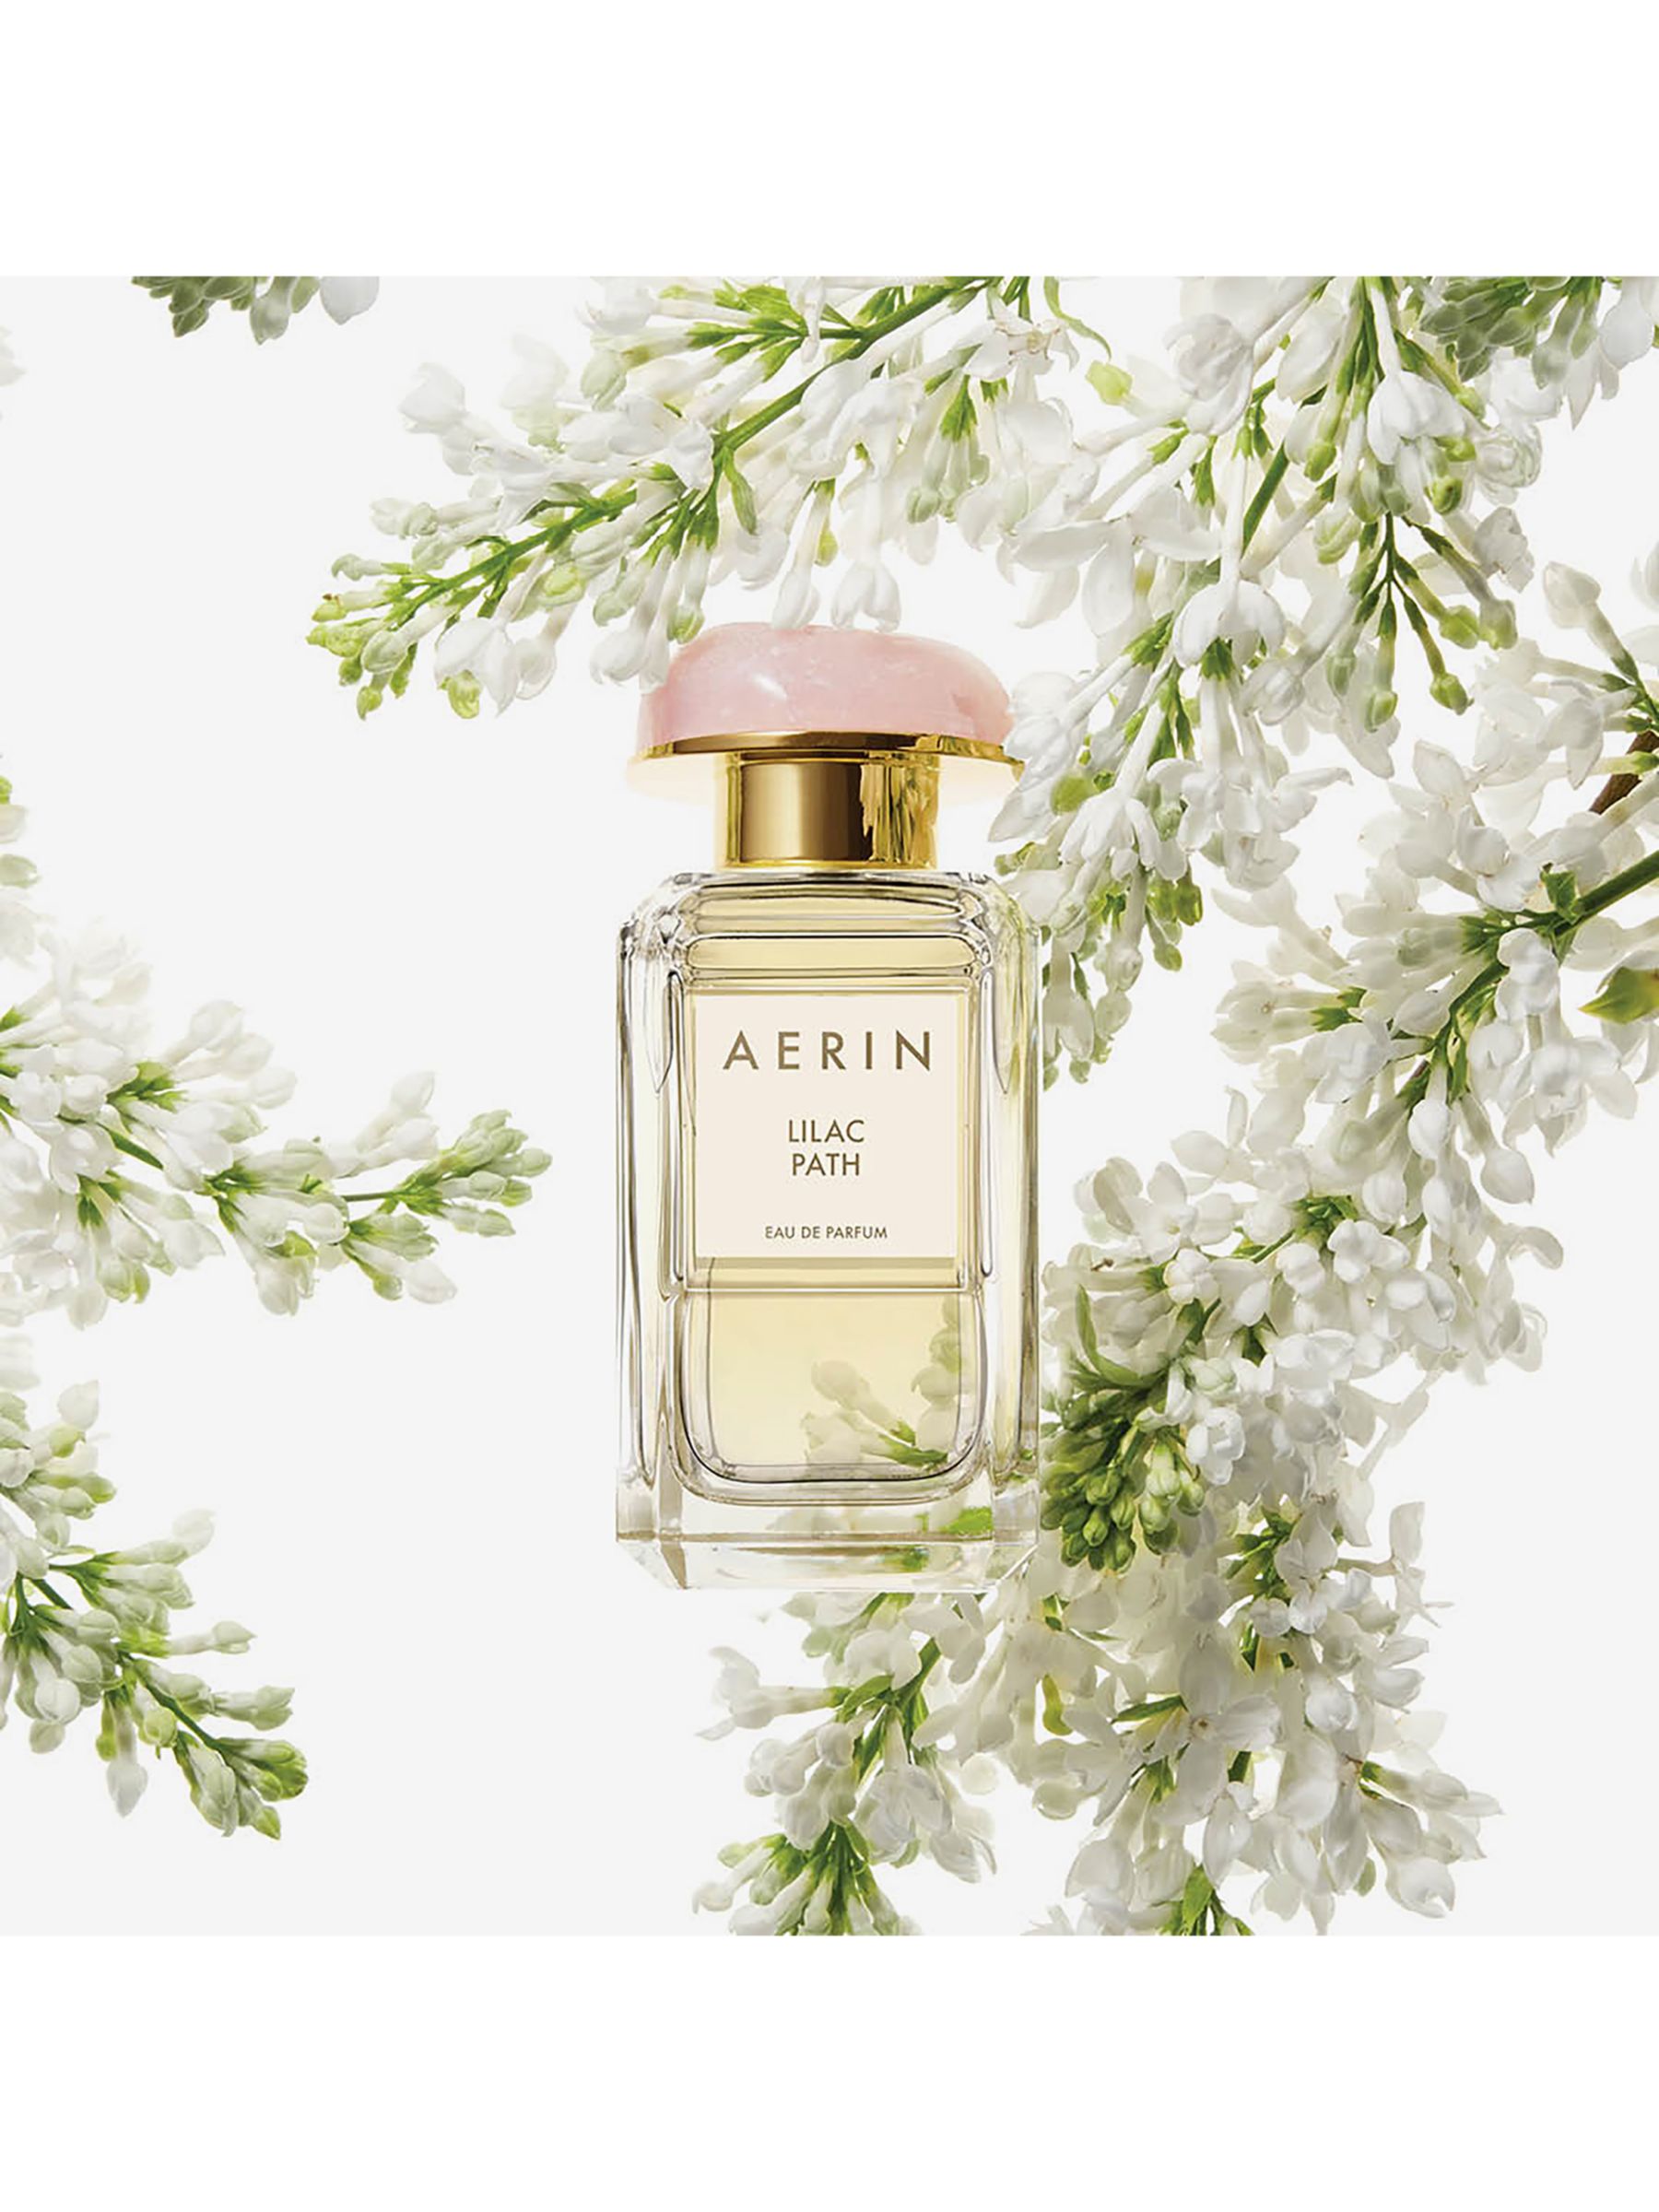 AERIN Lilac Path Eau de Parfum, 100ml at John Lewis & Partners